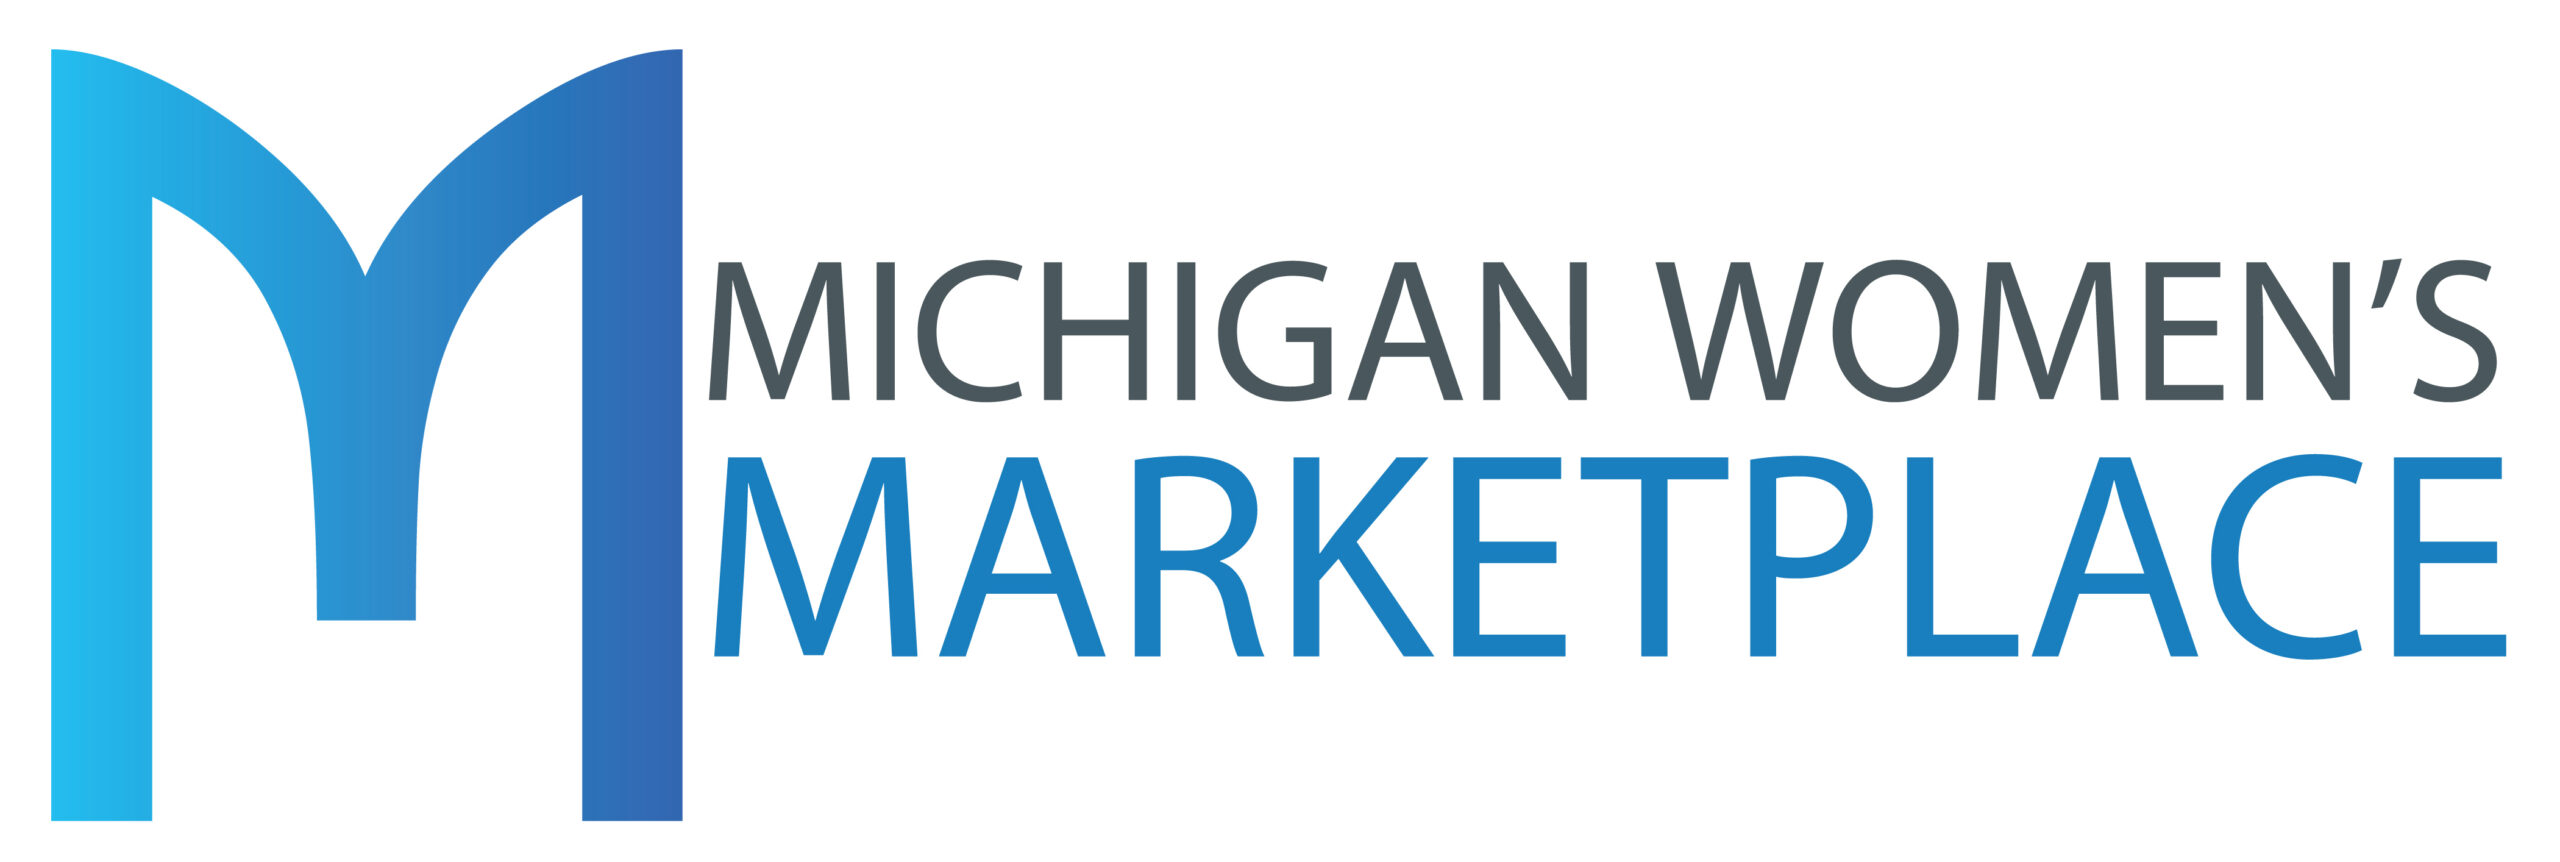 Michigan Women's Marketplace logo